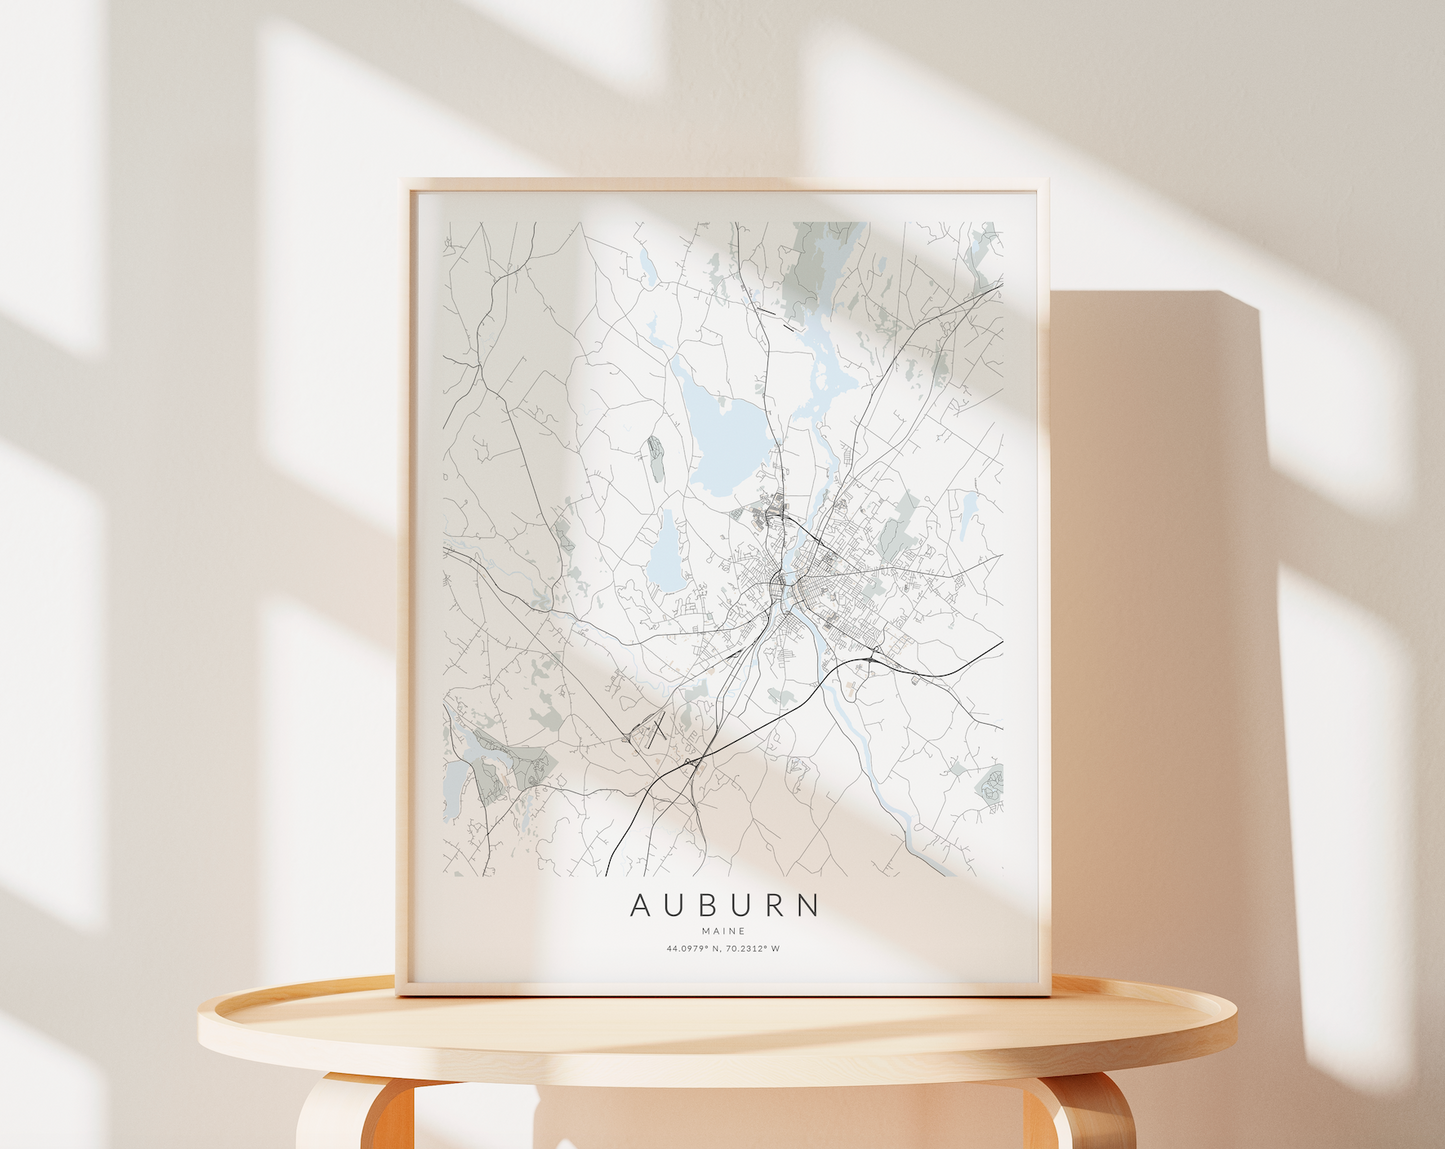 Auburn Map Print